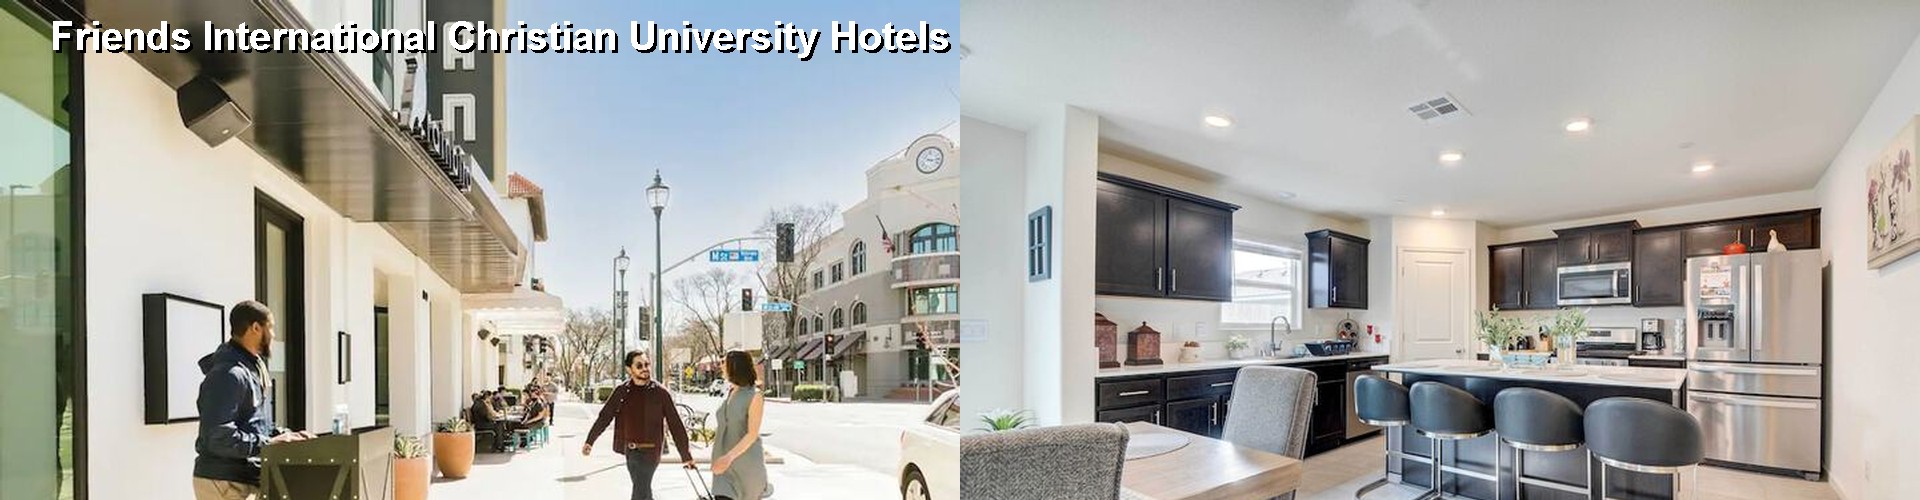 3 Best Hotels near Friends International Christian University